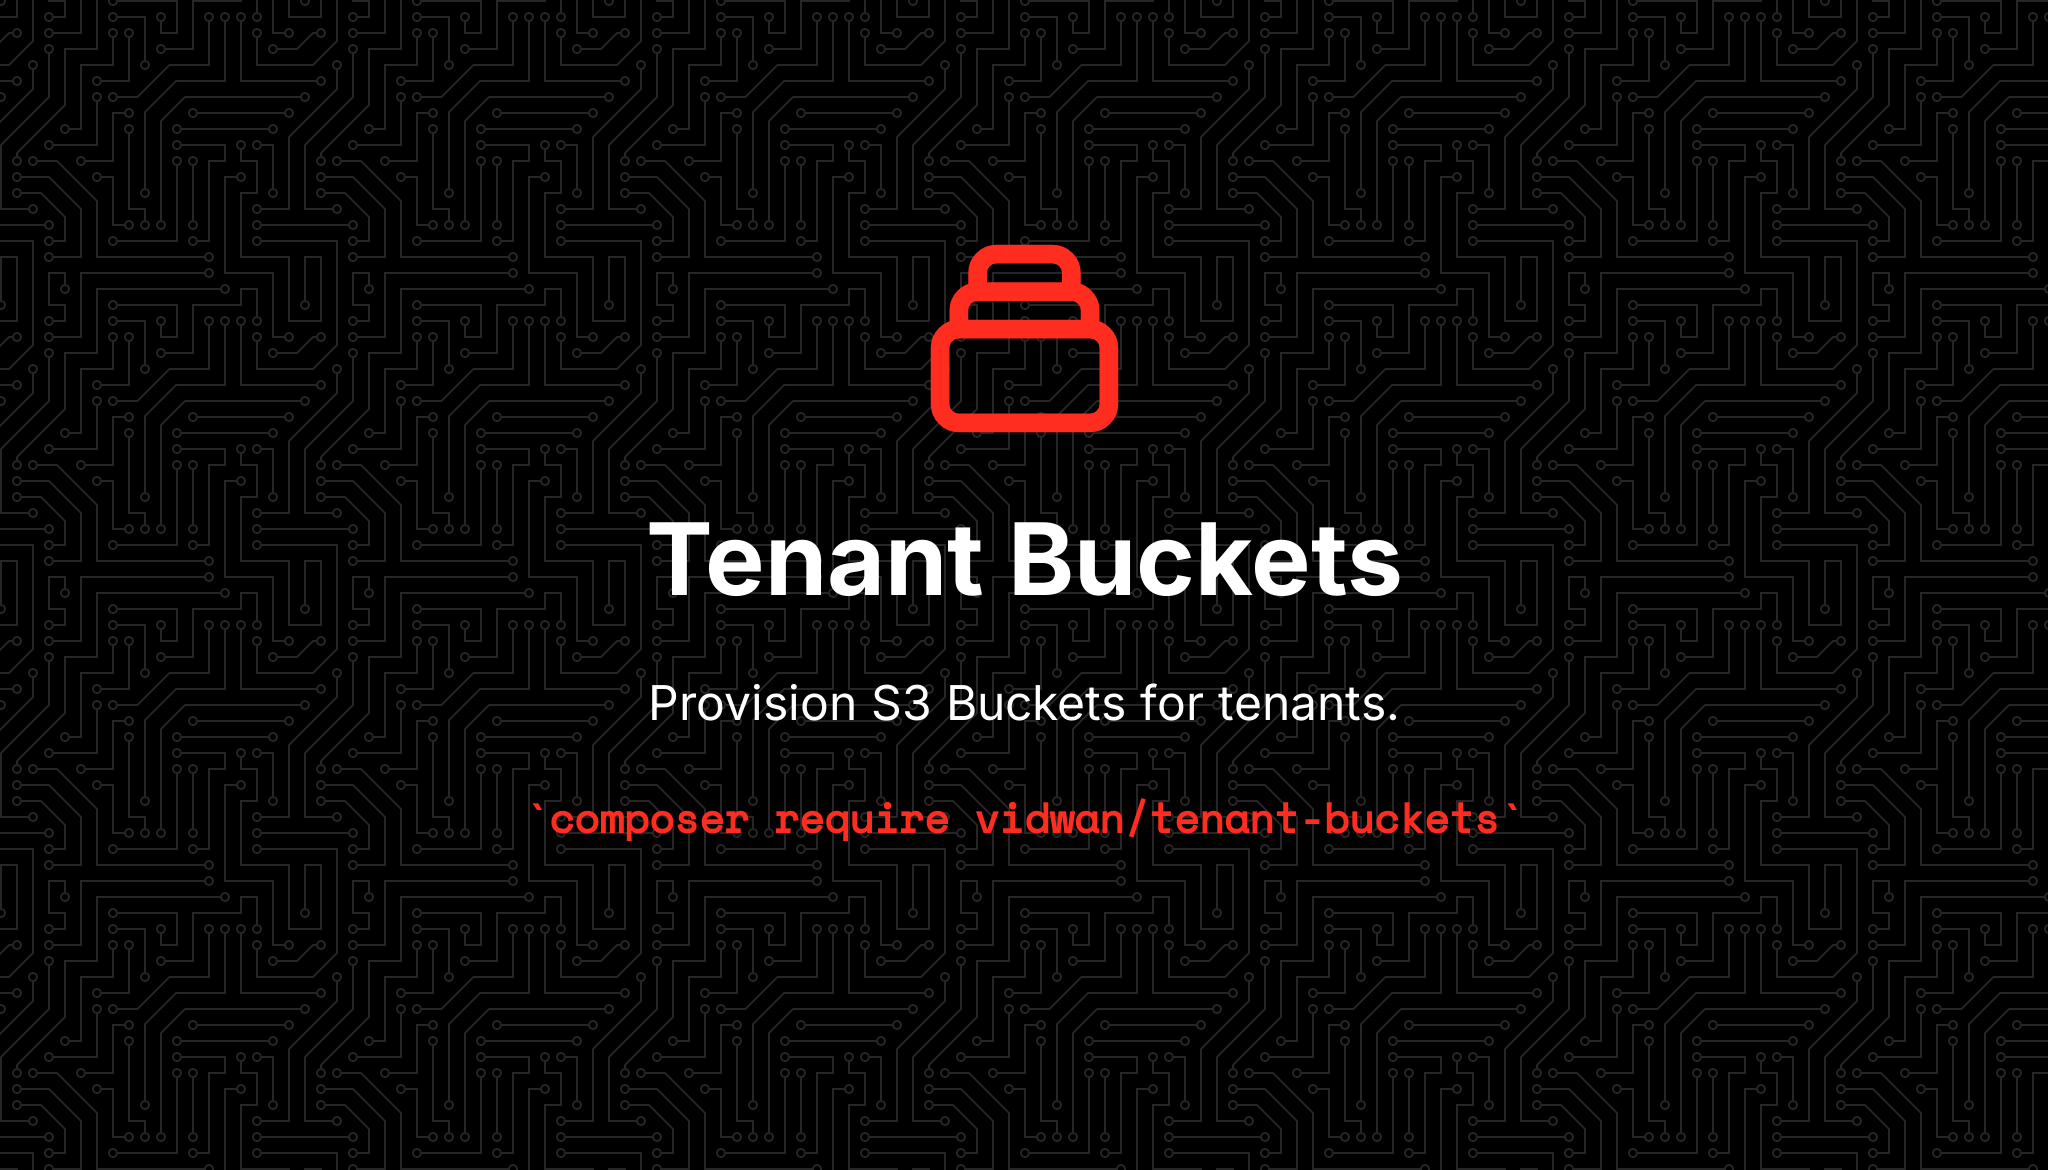 Vidwan/Tenant-Buckets